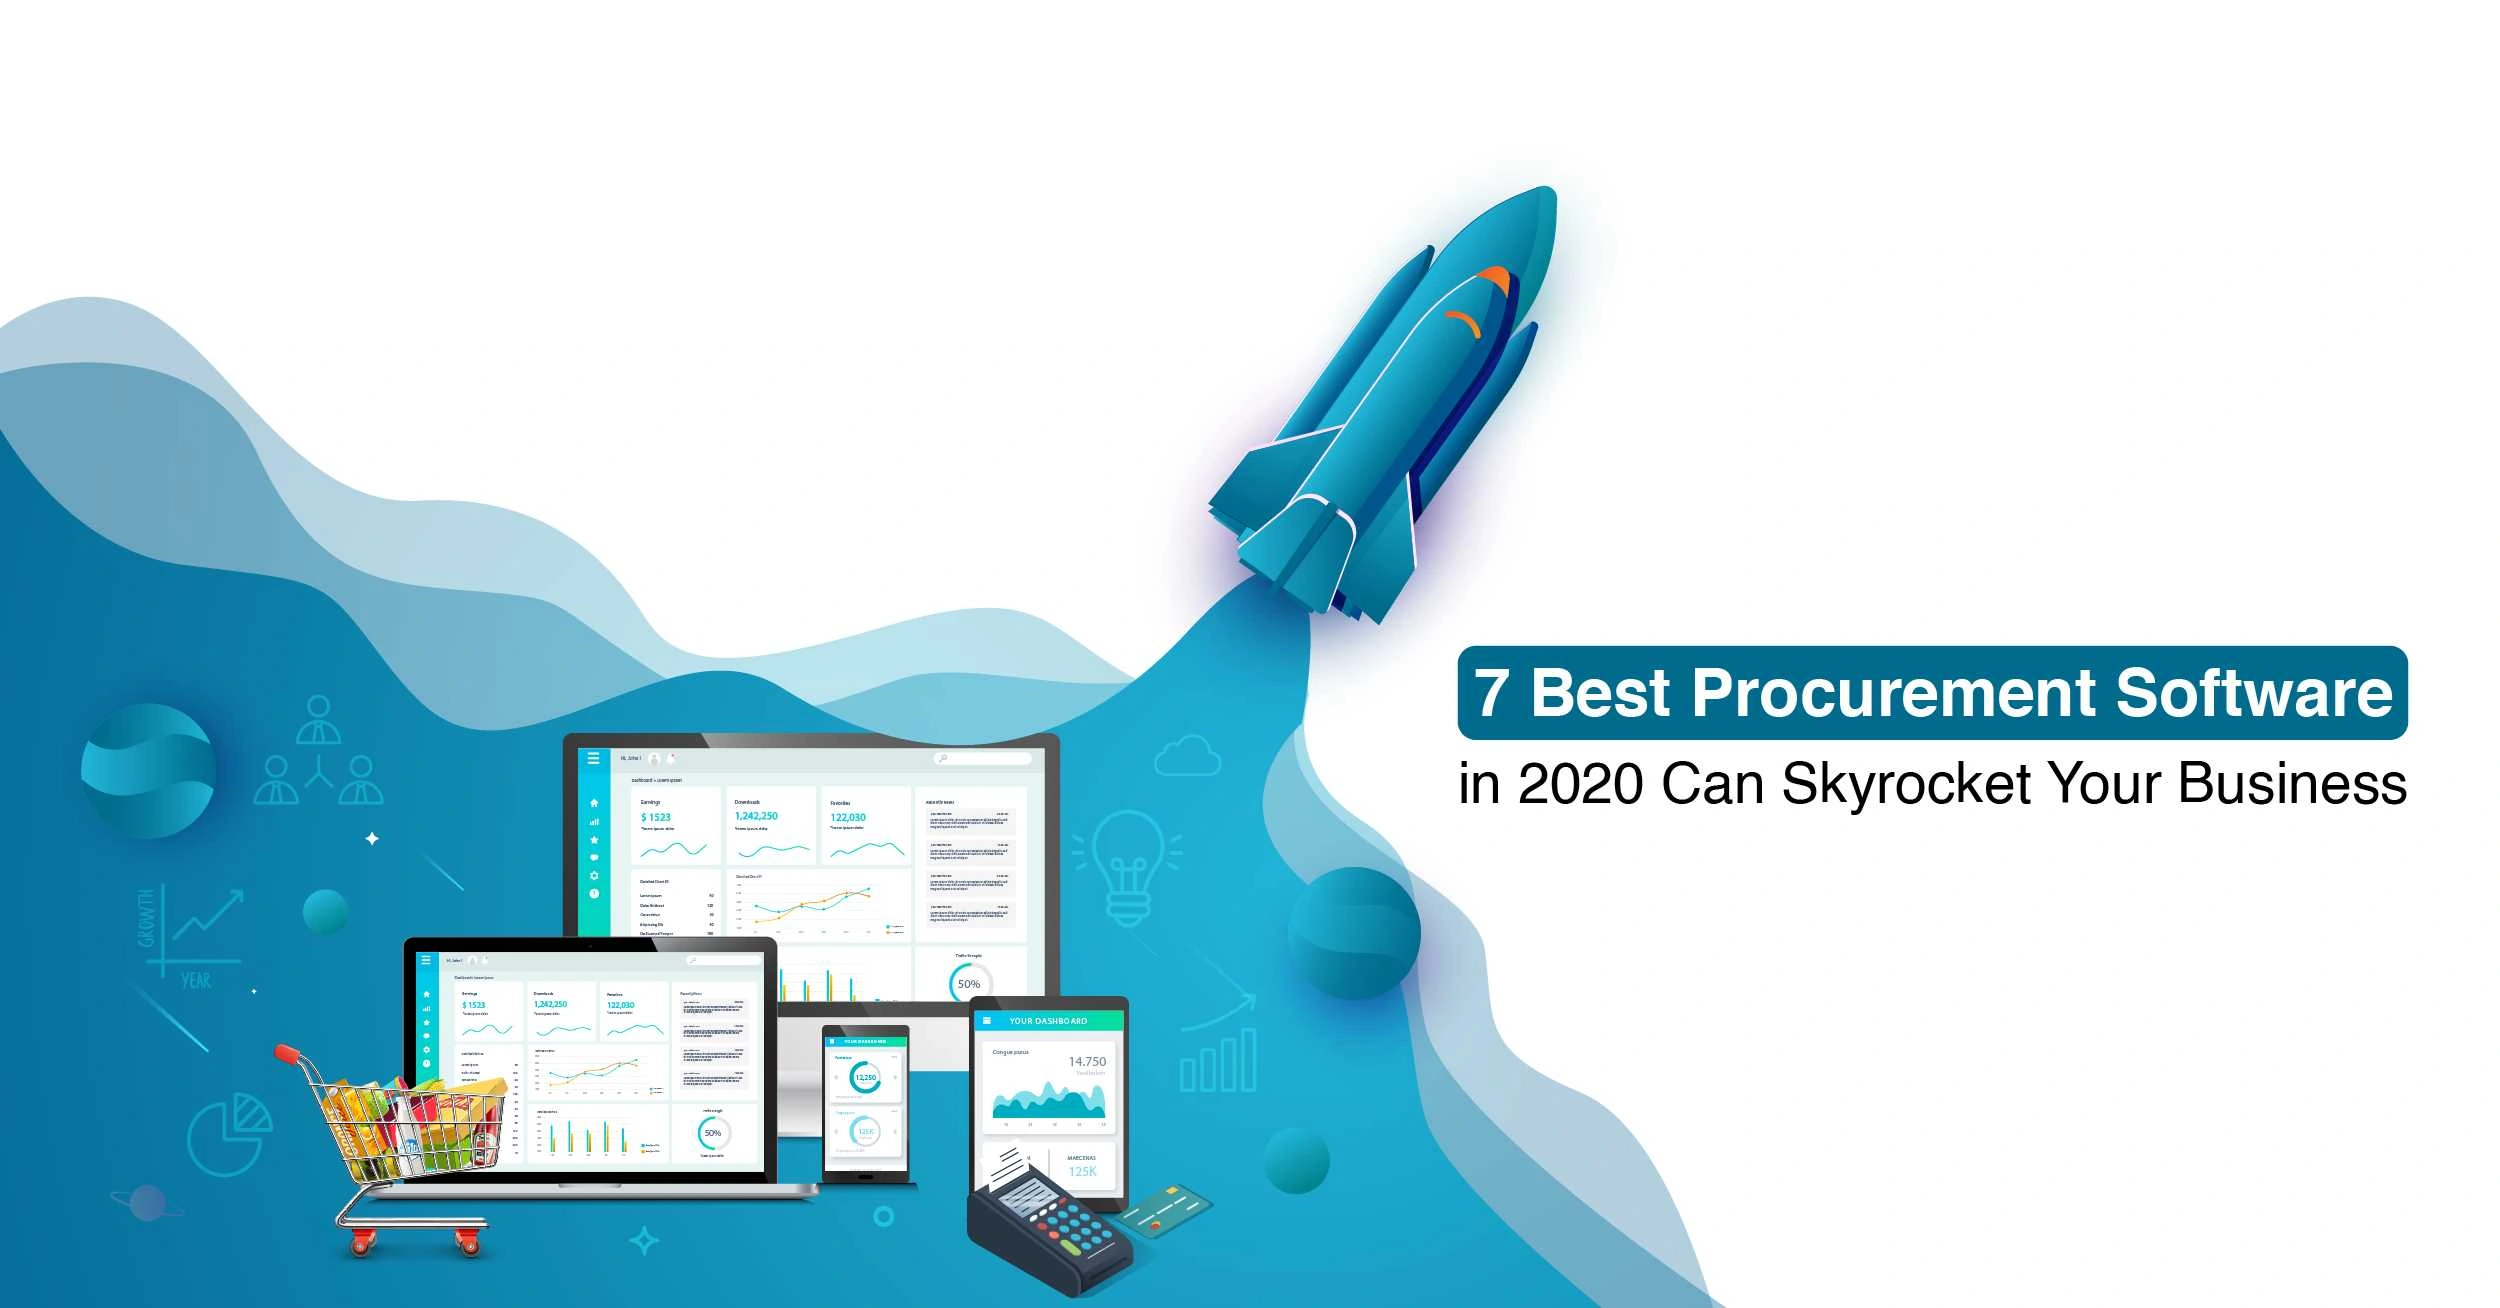 procurement-software